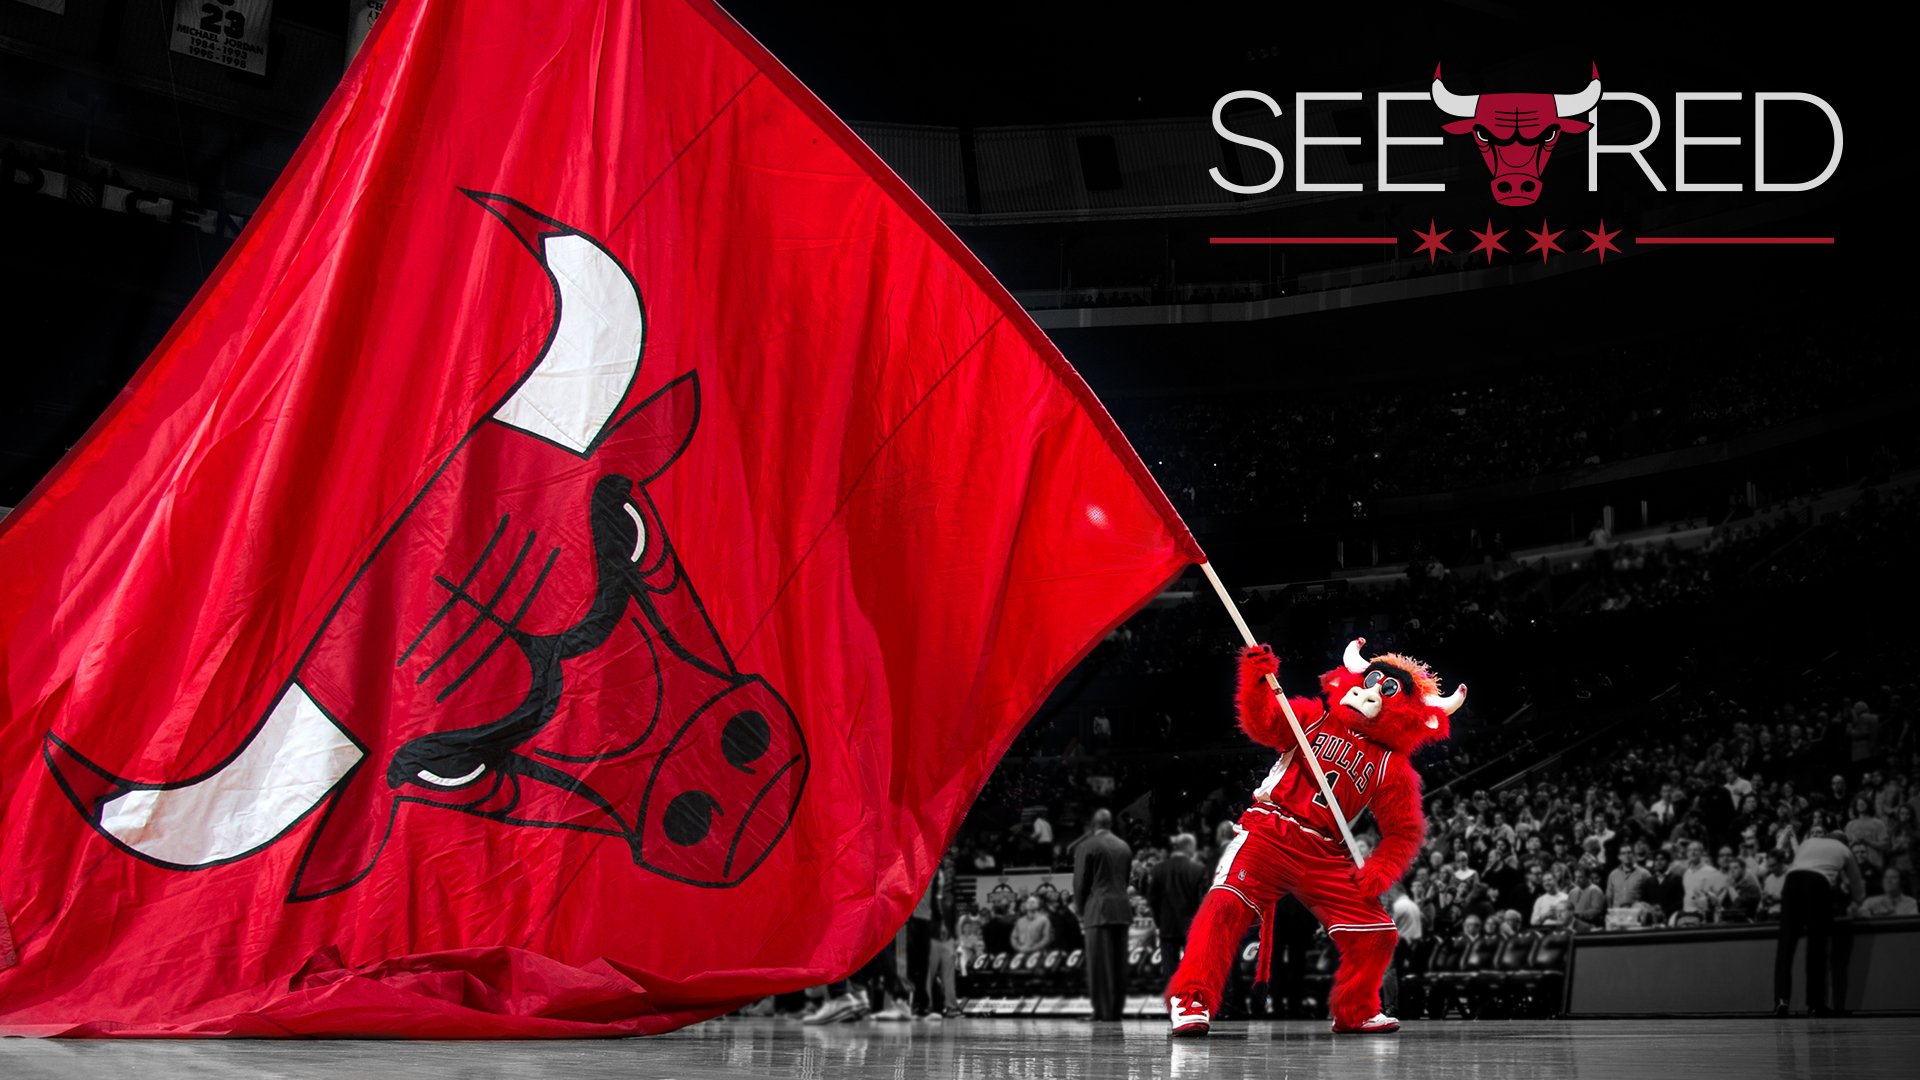 Chicago Bulls 2014 NBA Playoffs See Red